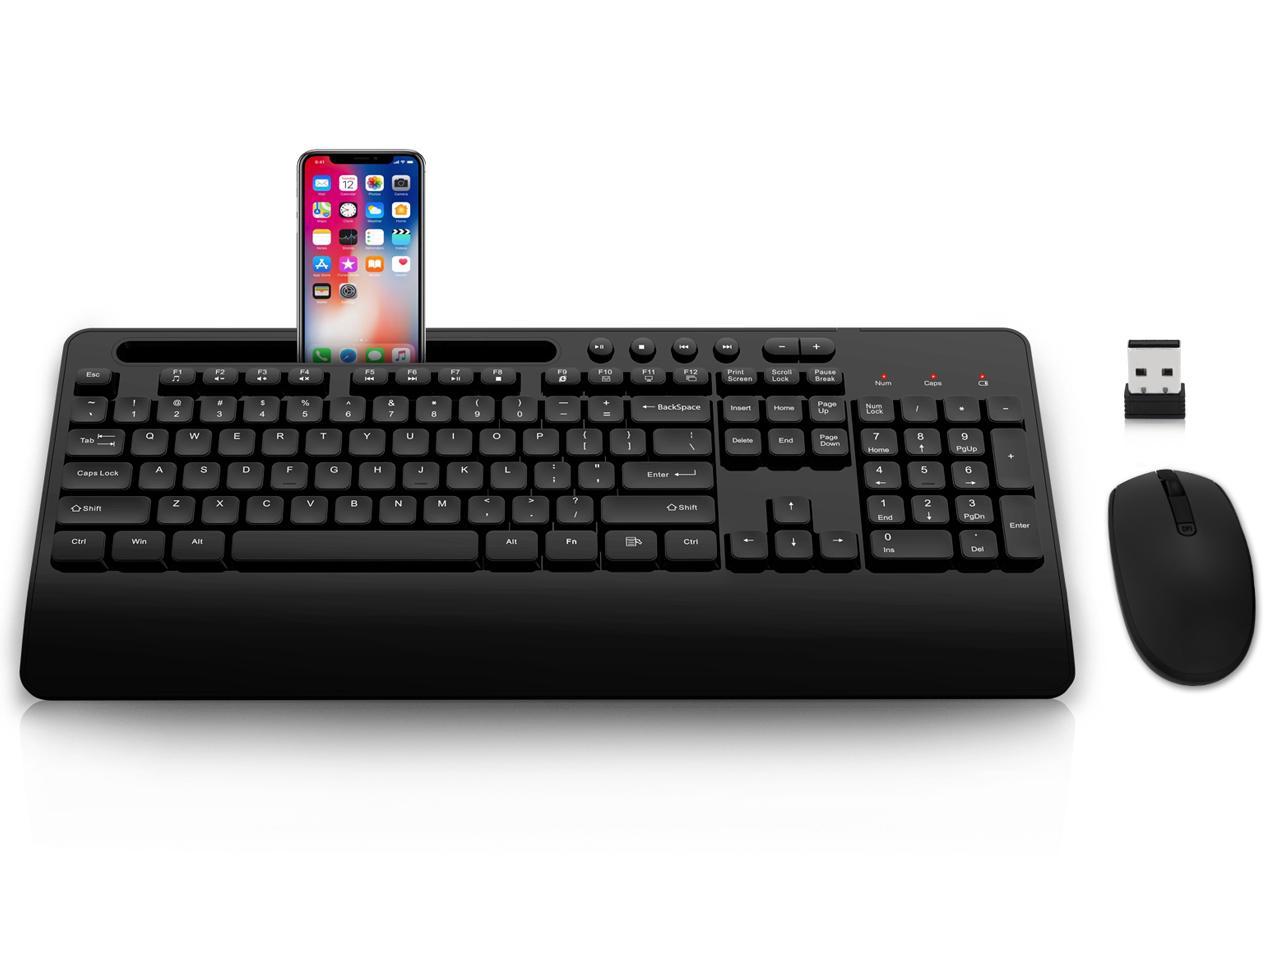 EDJO 2.4G Ergonomic Full Size Wireless Computer Keyboard with Wrist Rest for Windows Wireless Keyboard Mac OS Desktop/Laptop/PC 